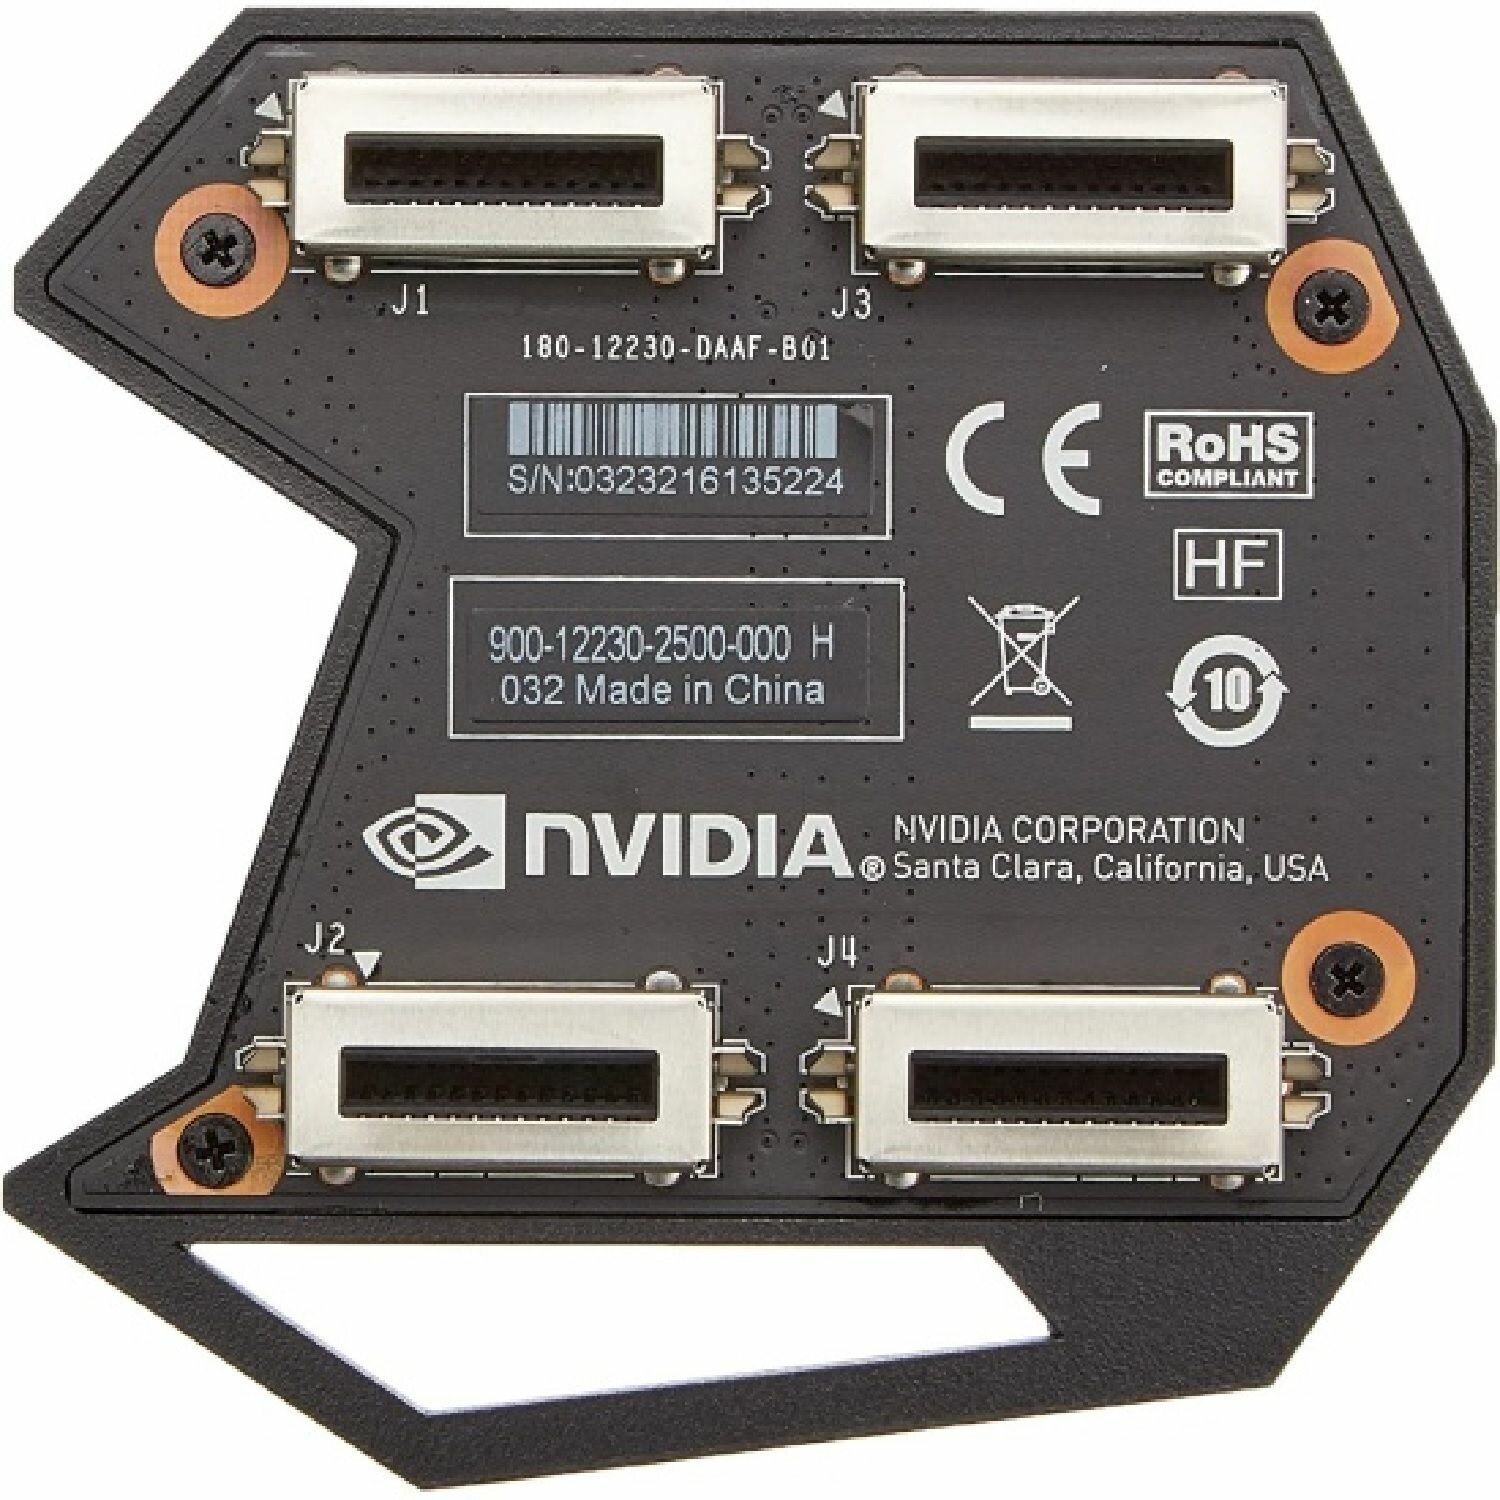 Аксессуар Nvidia GEFORCE GTX SLI HB BRIDGE 2-SLOT (900-12230-2500-000) RTL {40}